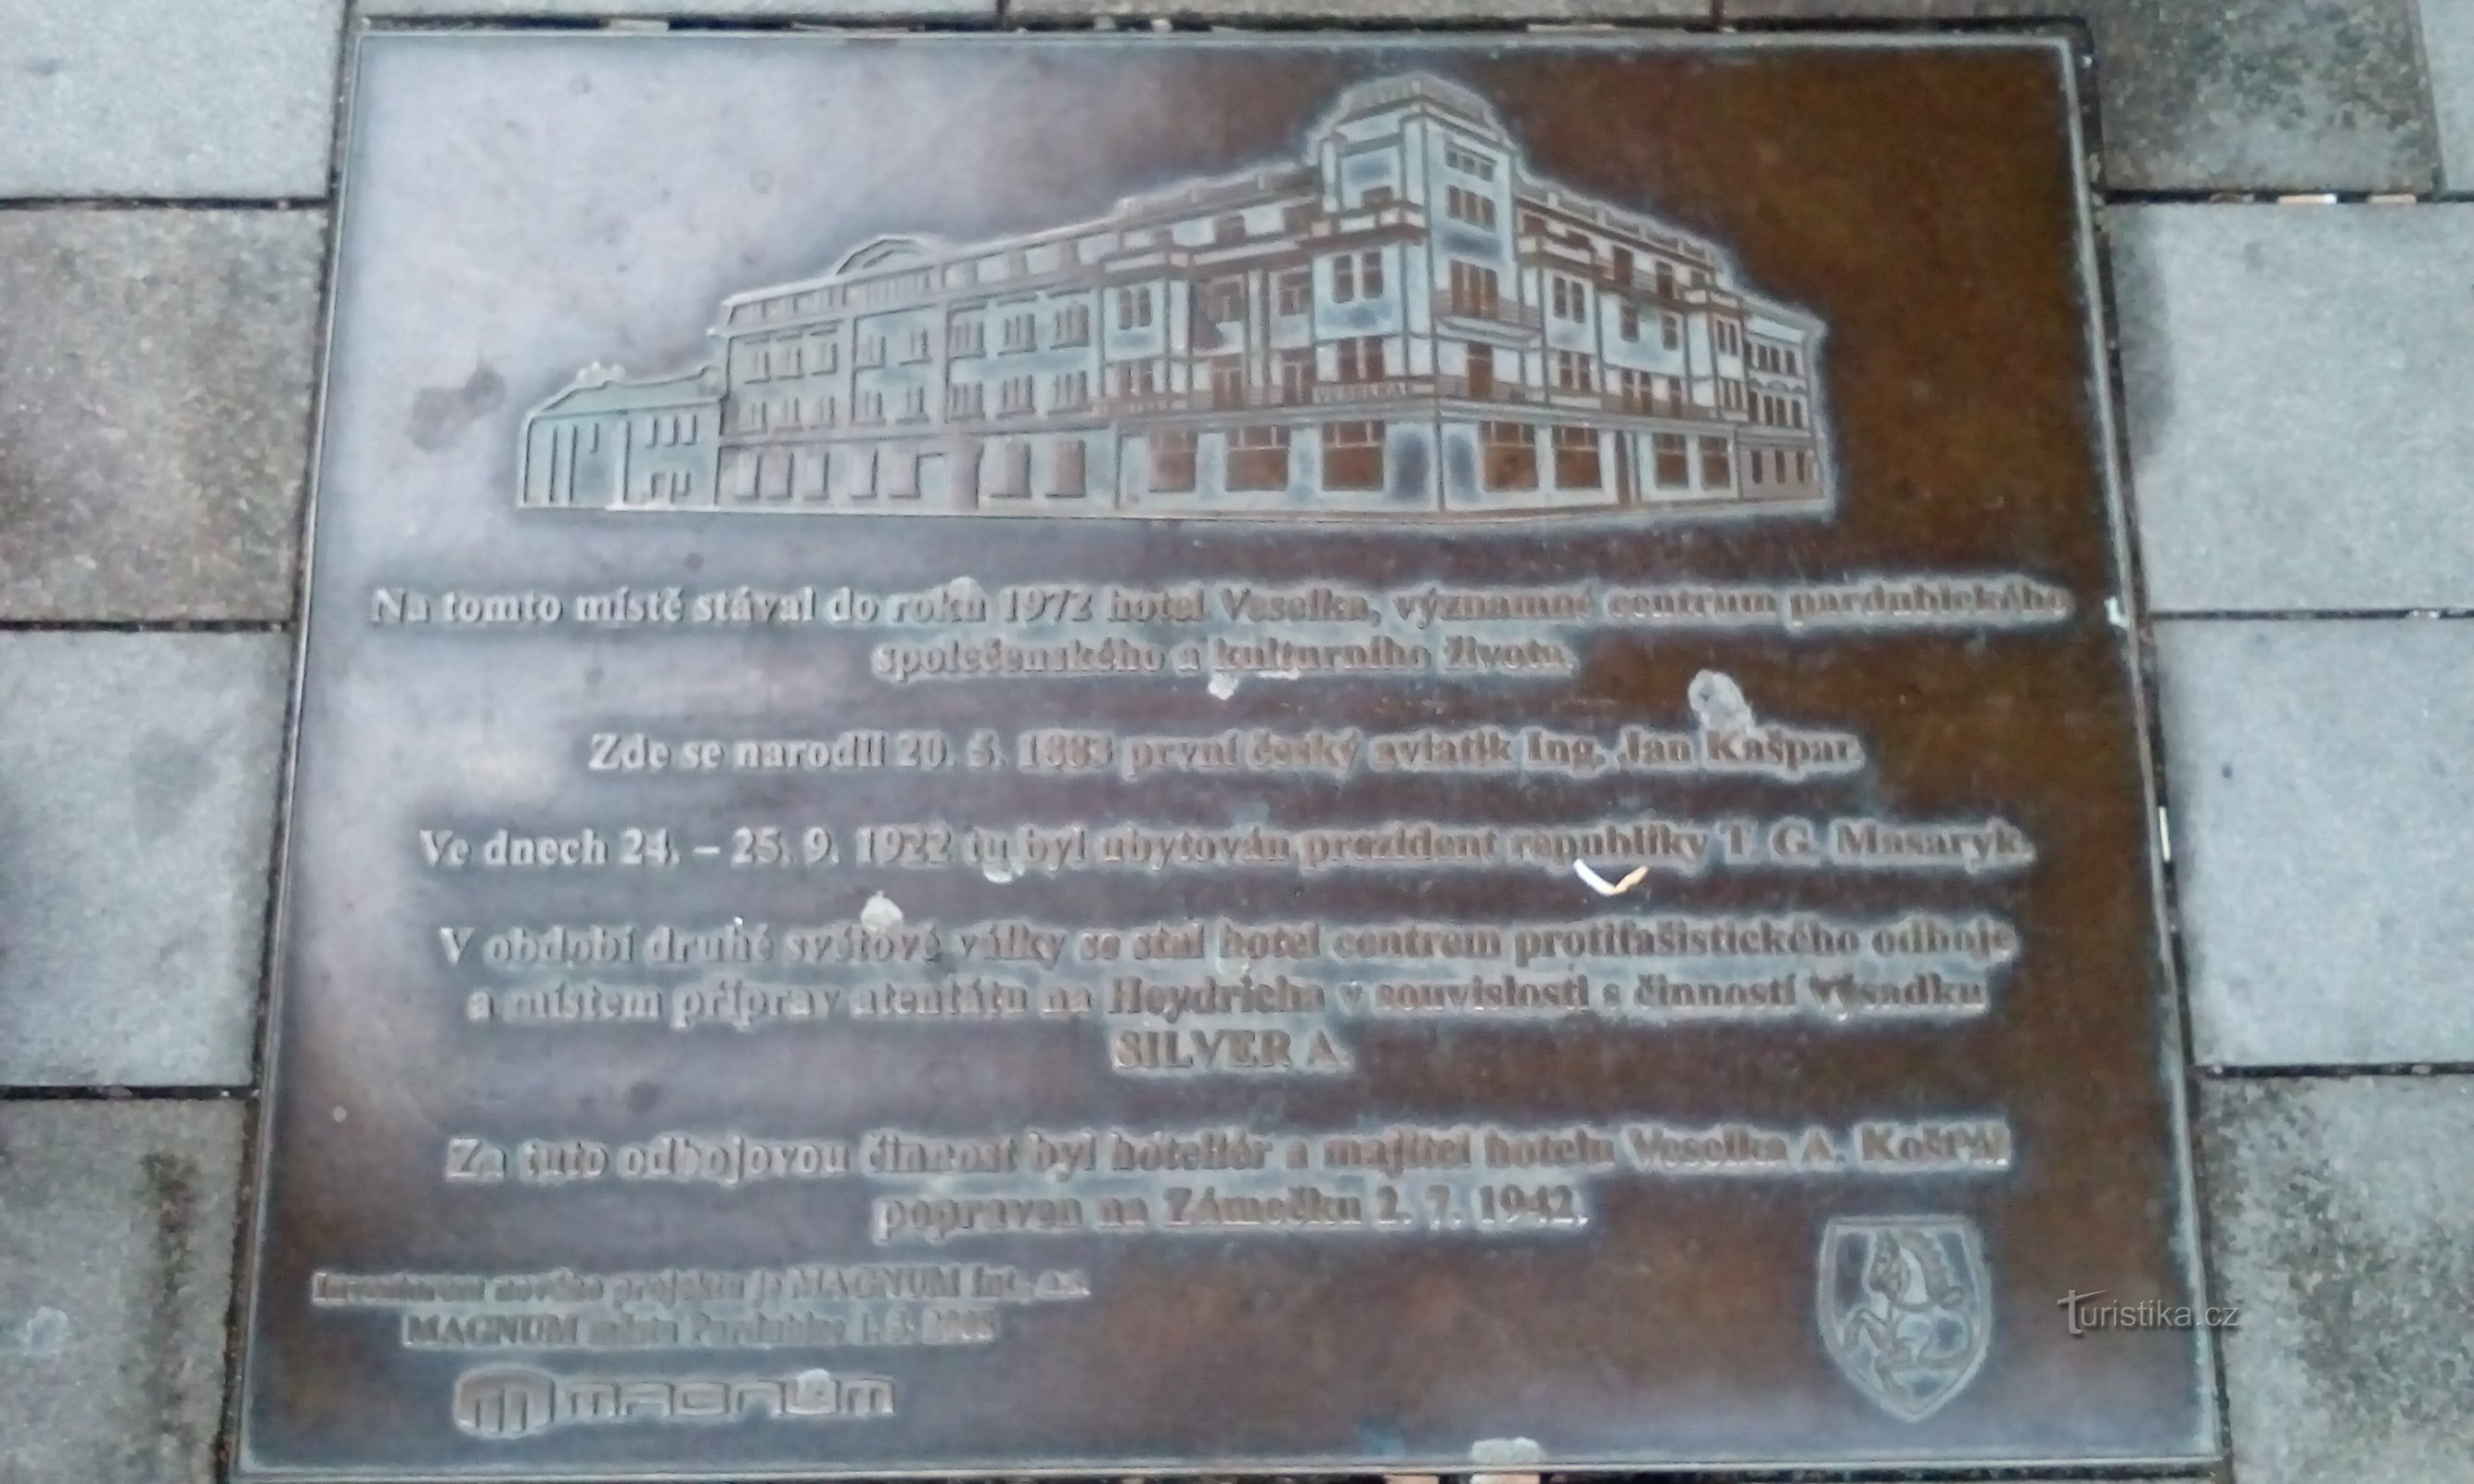 Veselka酒店的纪念牌匾。